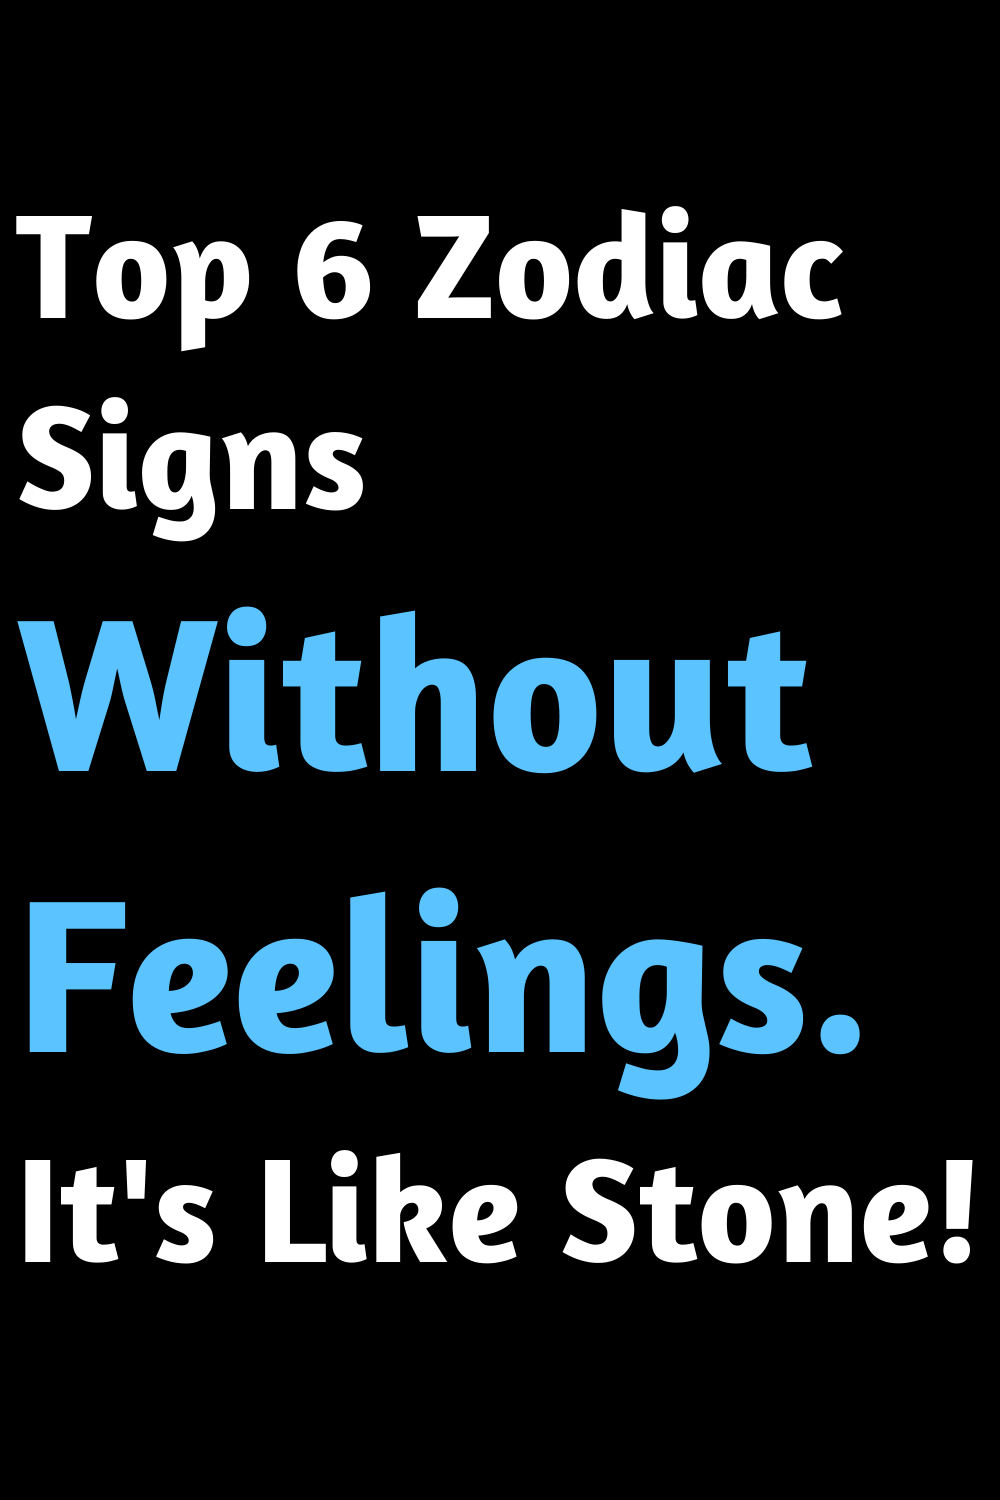 Top 6 Zodiac Signs Without Feelings. It's Like Stone!